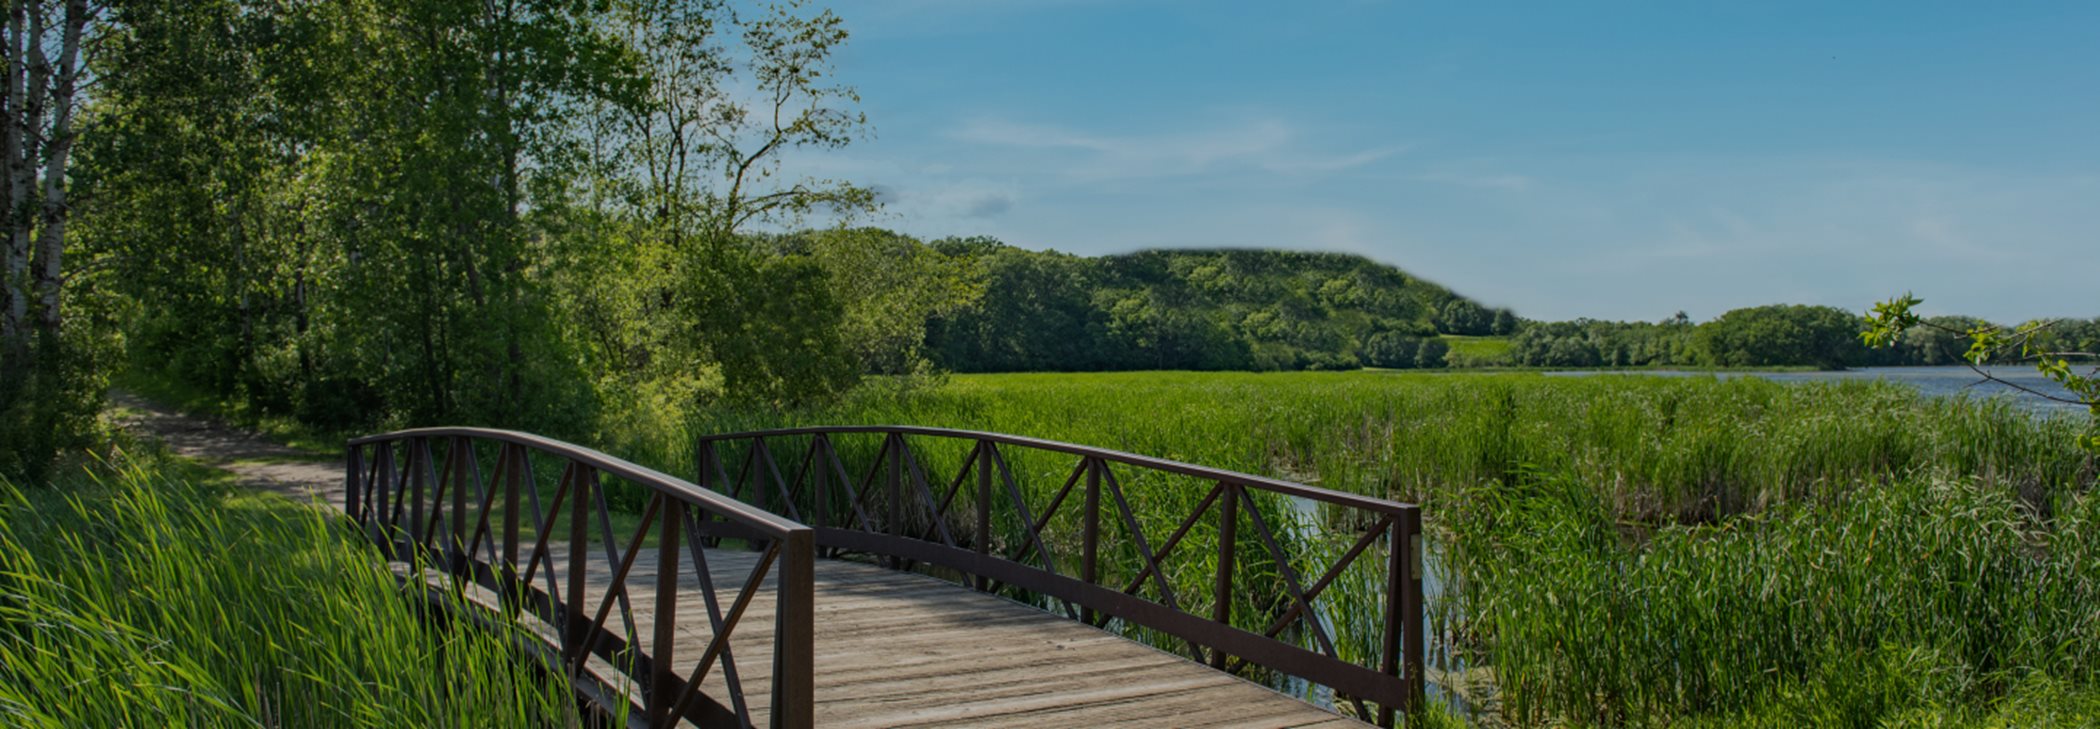 Nature trail with bridge crossing lake